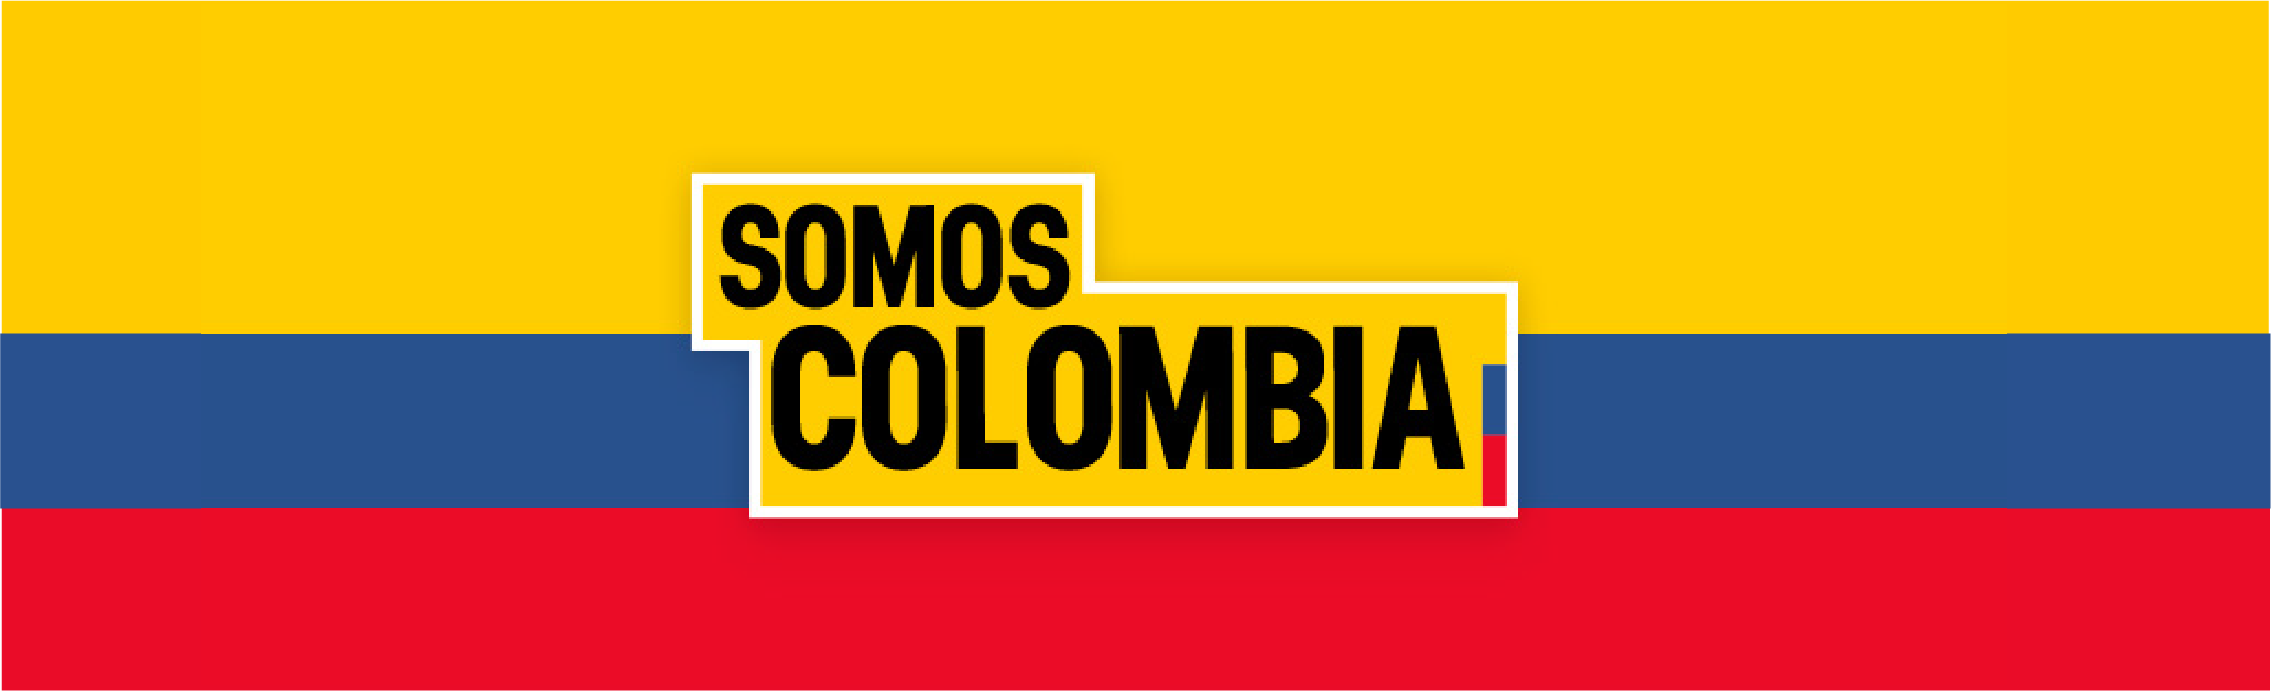 Moda colombiana atrae a Ecuador afirma Procolombia